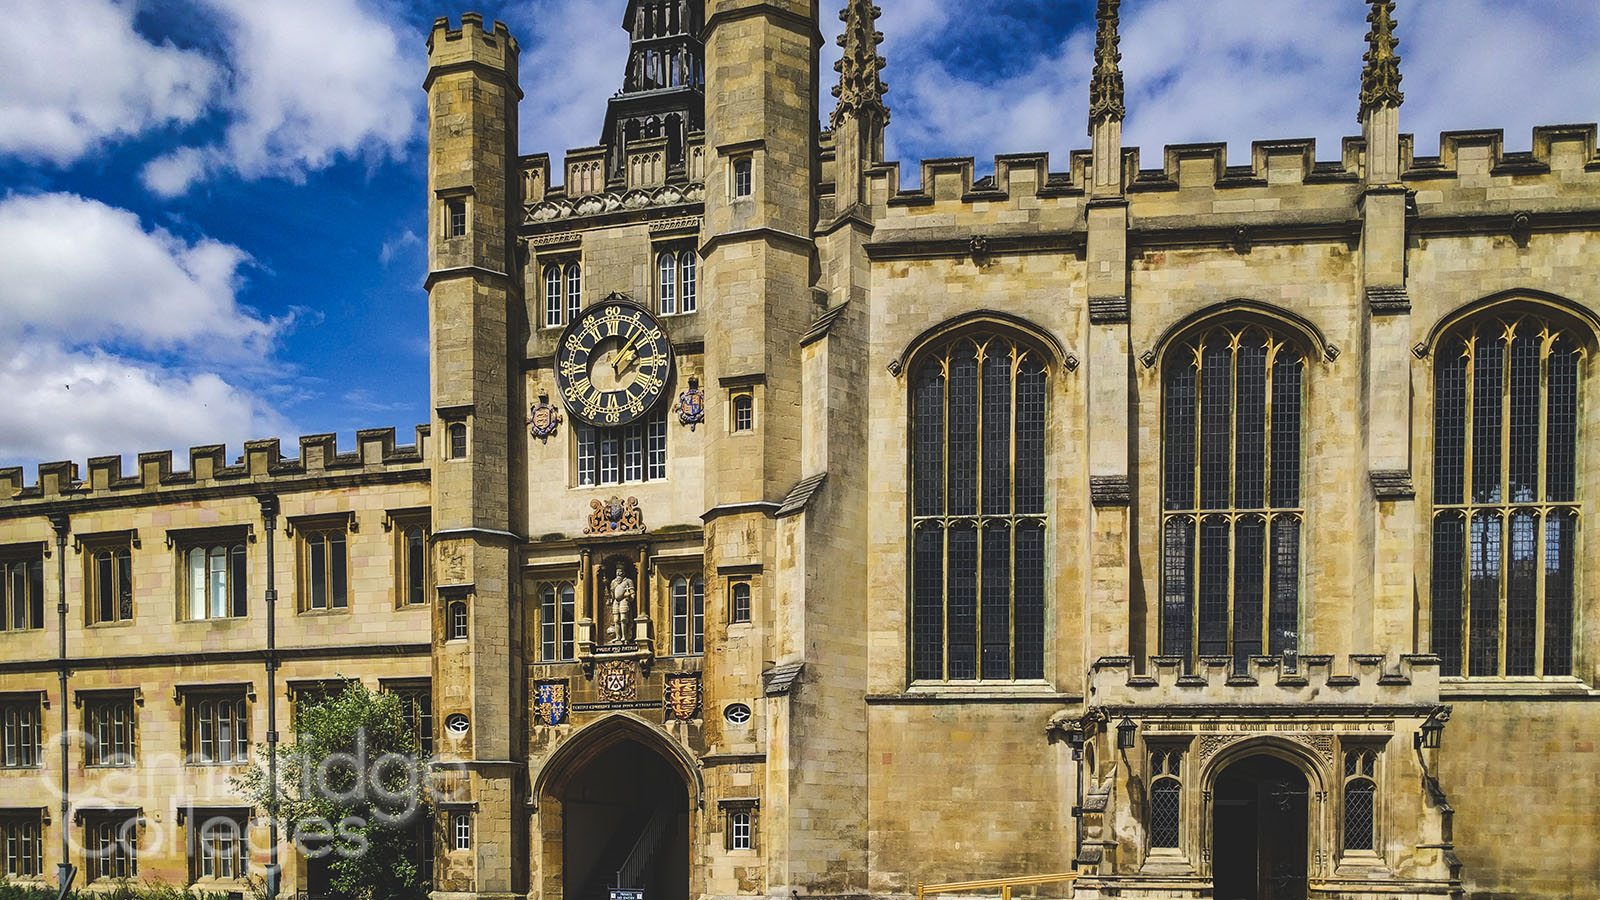 The Clock tower of Trinity collge, Cambridge